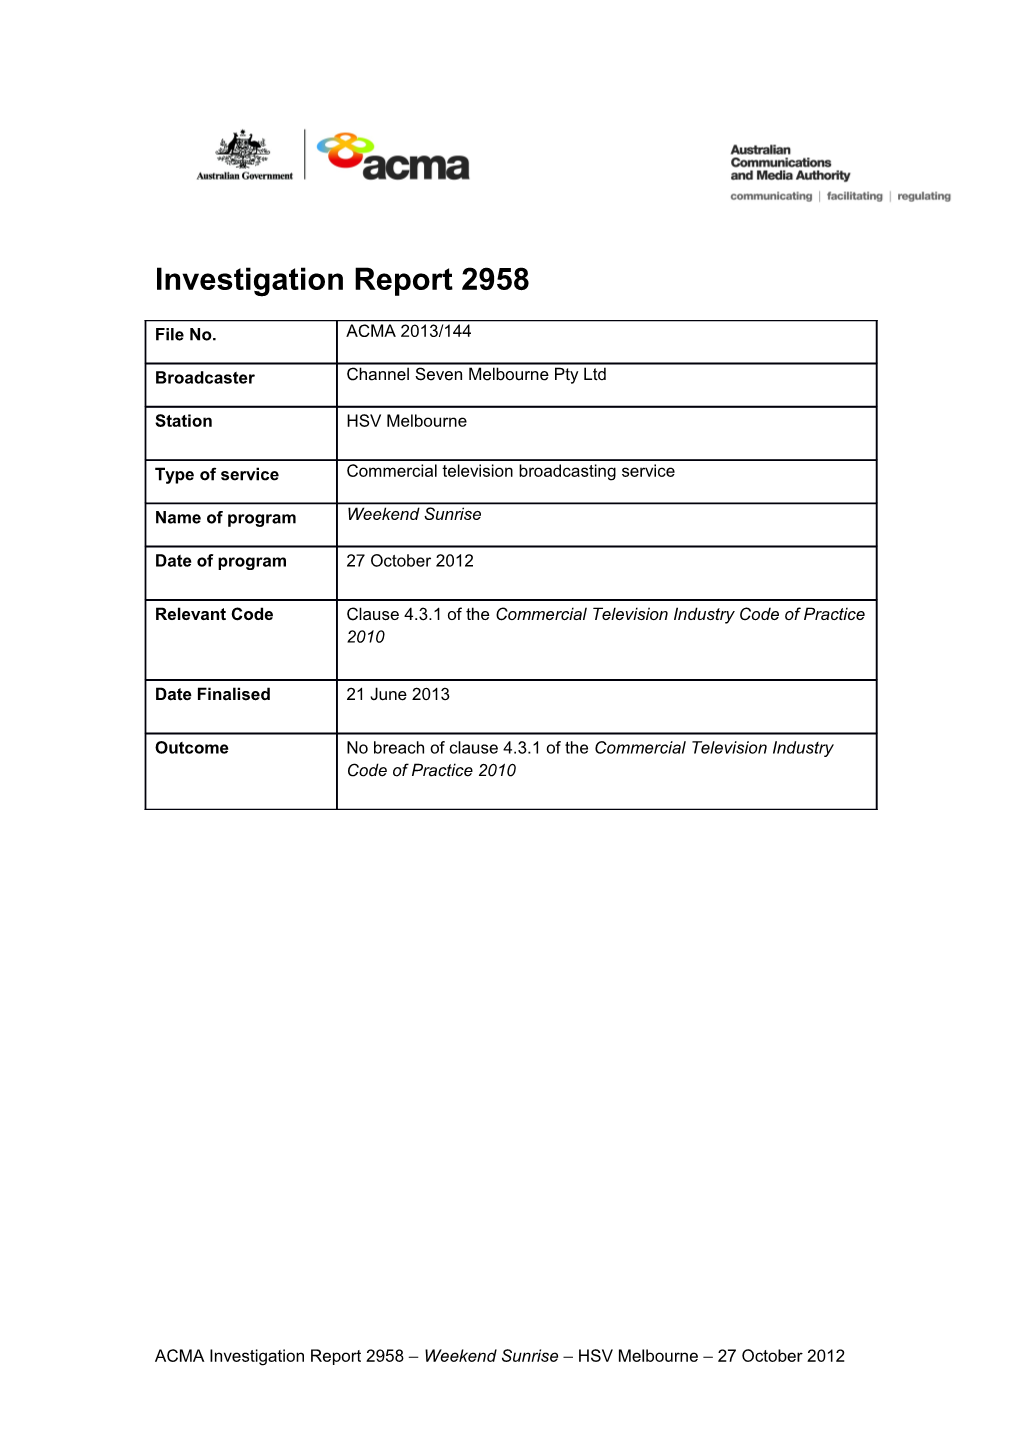 HSV (Melb) - ACMA Investigation Report 2958